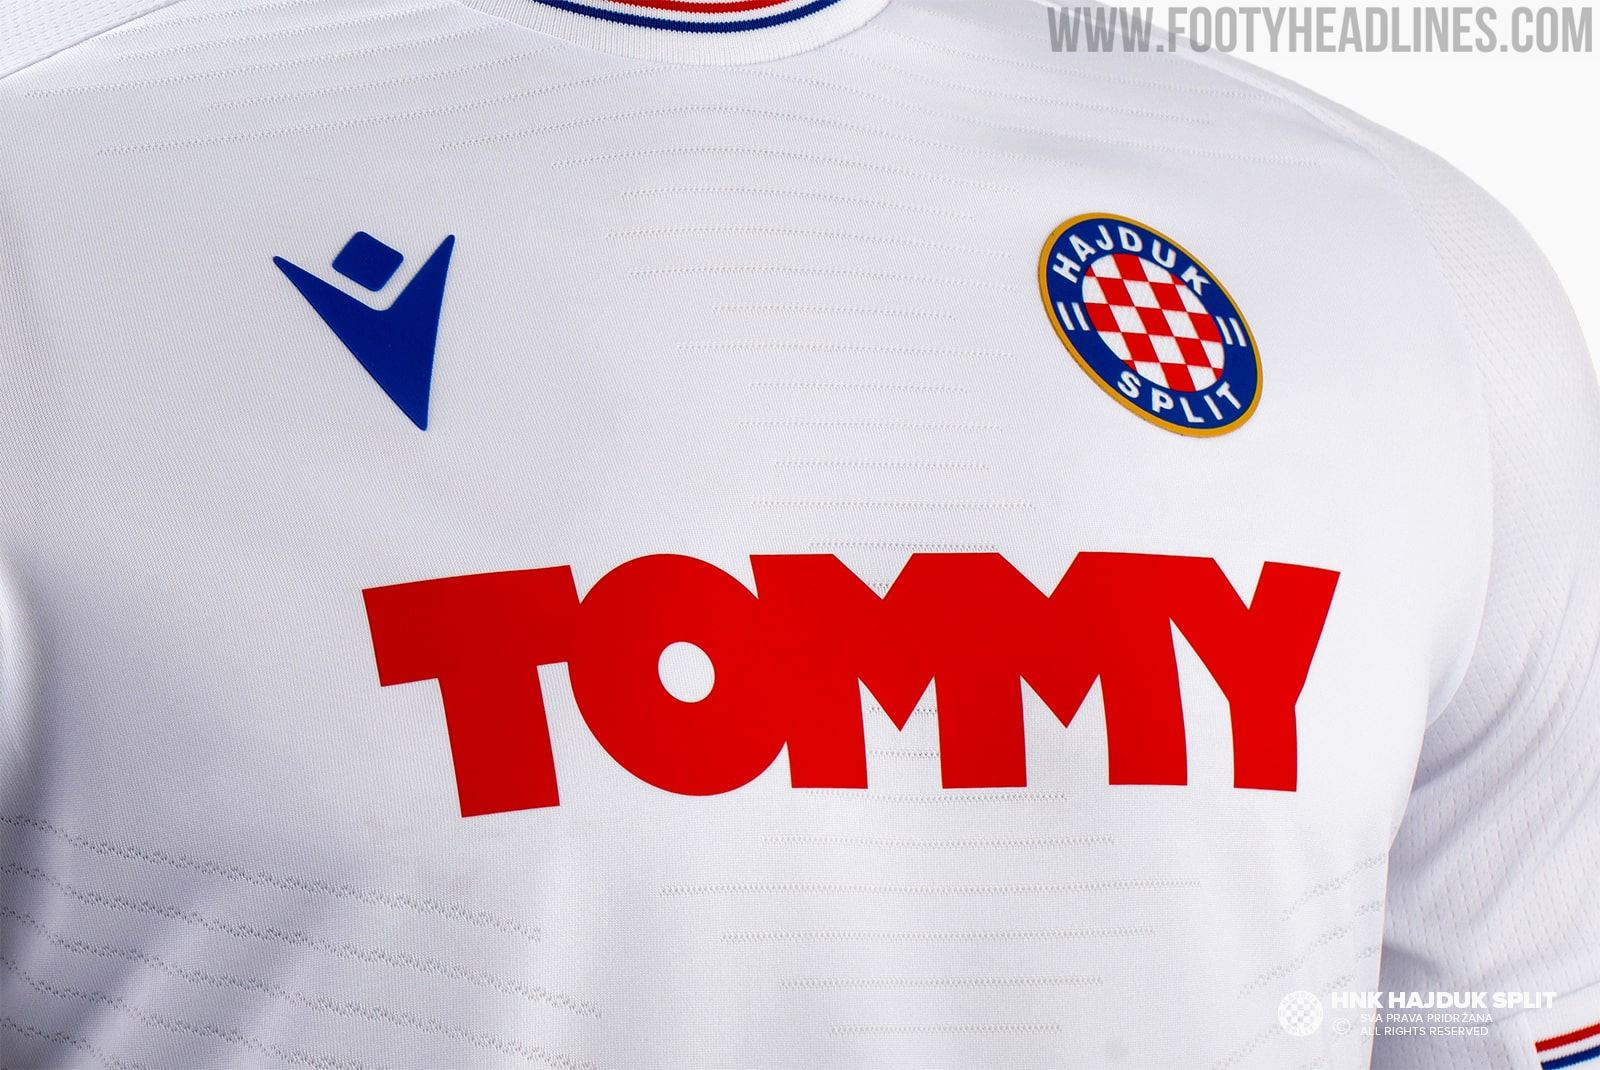 22/23 Hajduk Split Camiseta De Futebol Hajduk Split home jersey tailandesa  1:1 - Escorrega o Preço